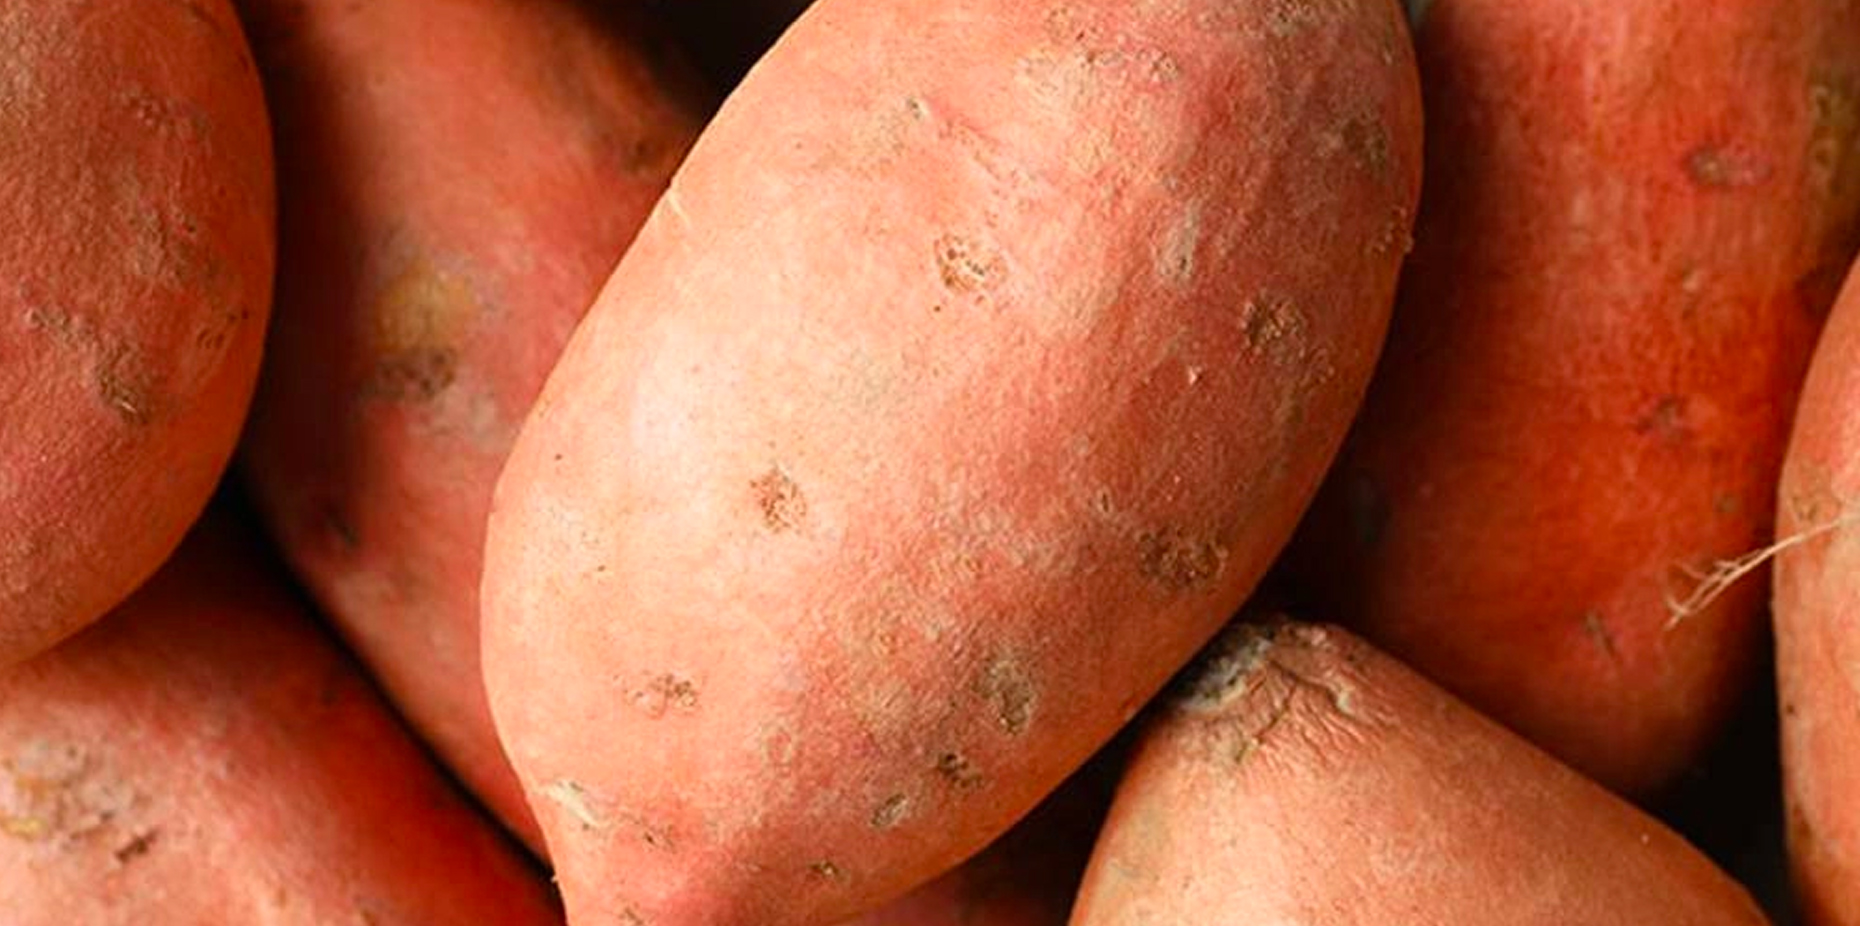 11 Health Benefits Of Sweet Potatoes